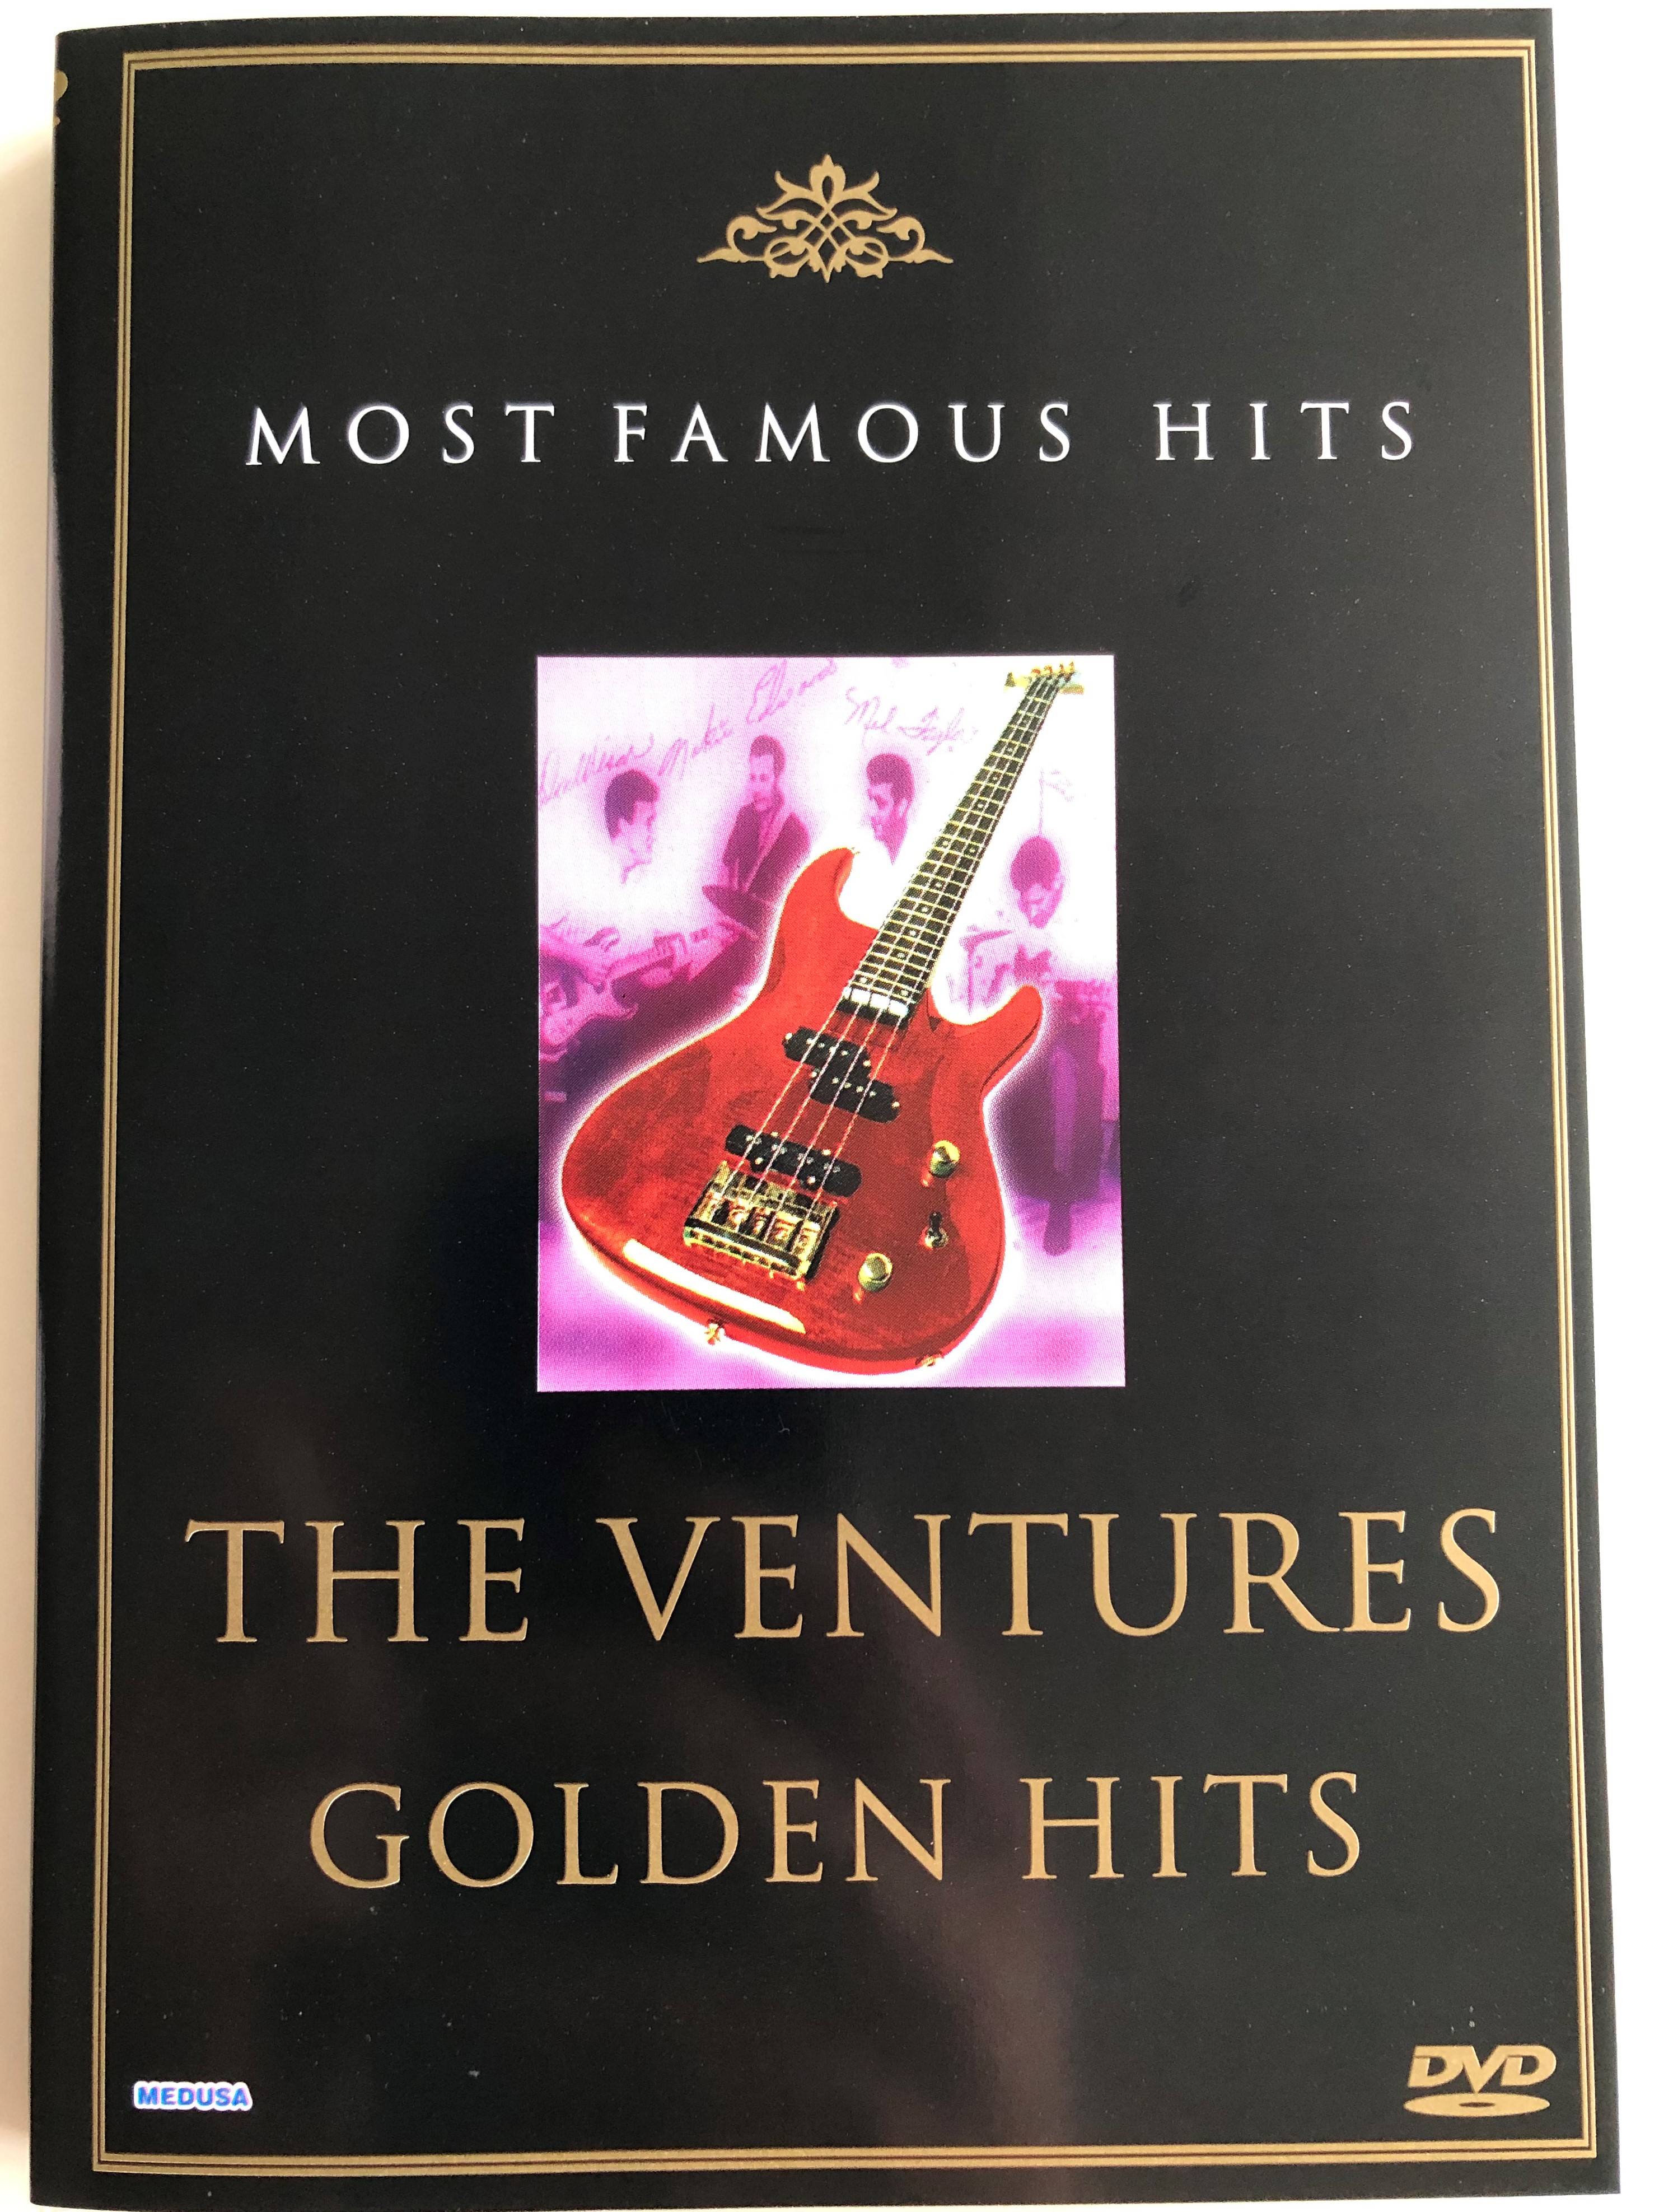 the-ventures-golden-hits-dvd-2003-most-famous-hits-walk-don-t-run-1.jpg